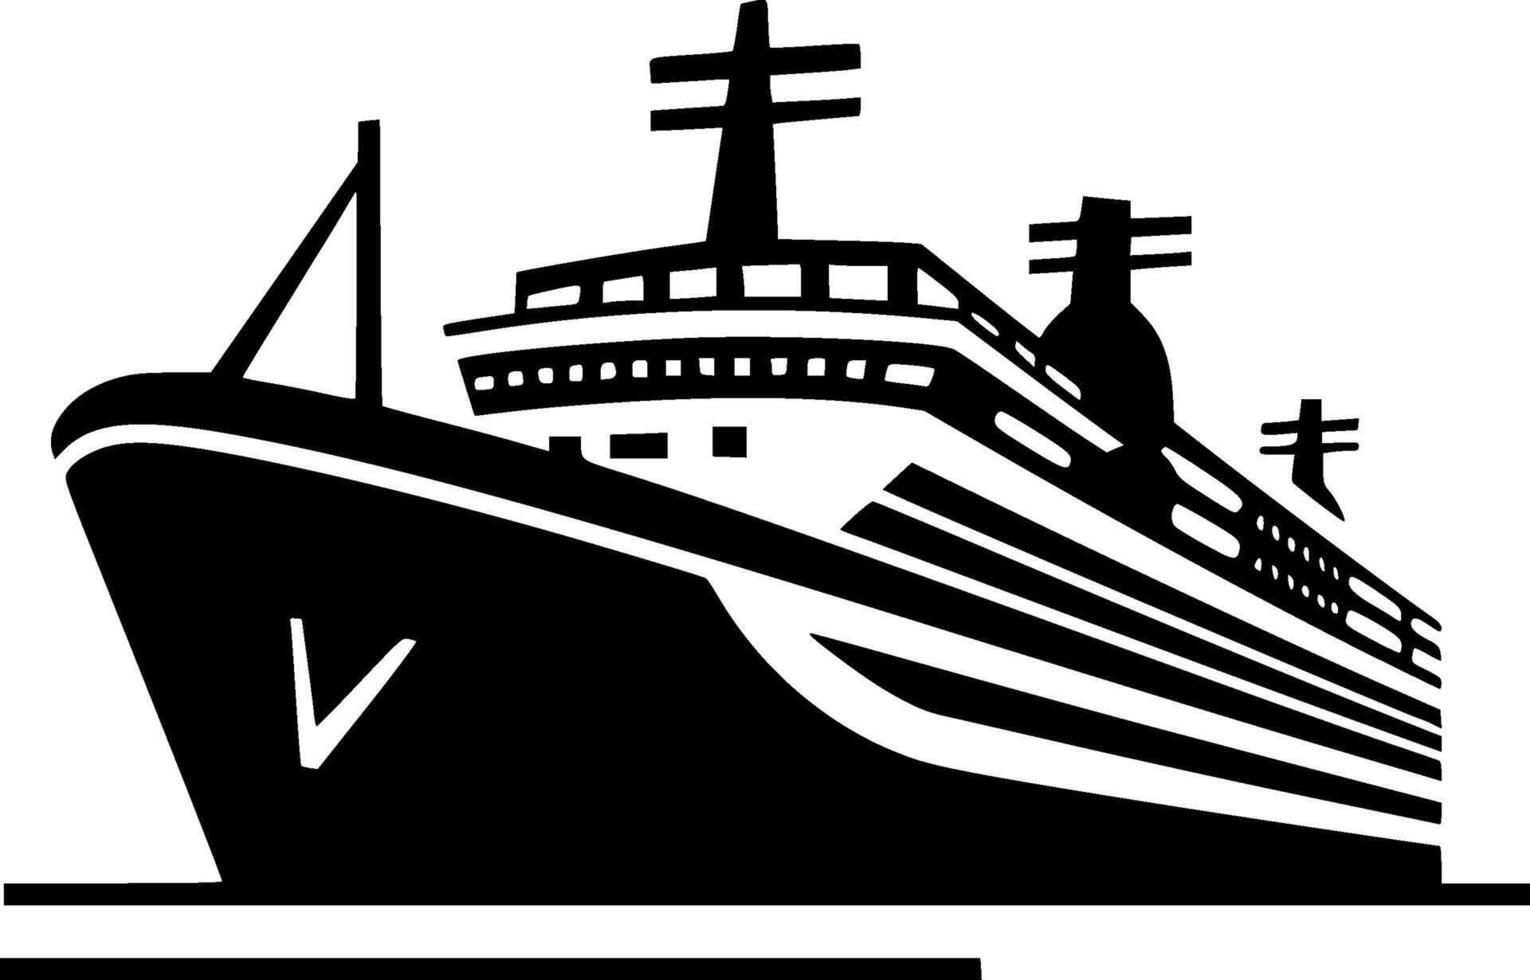 Cruise, Minimalist and Simple Silhouette - Vector illustration